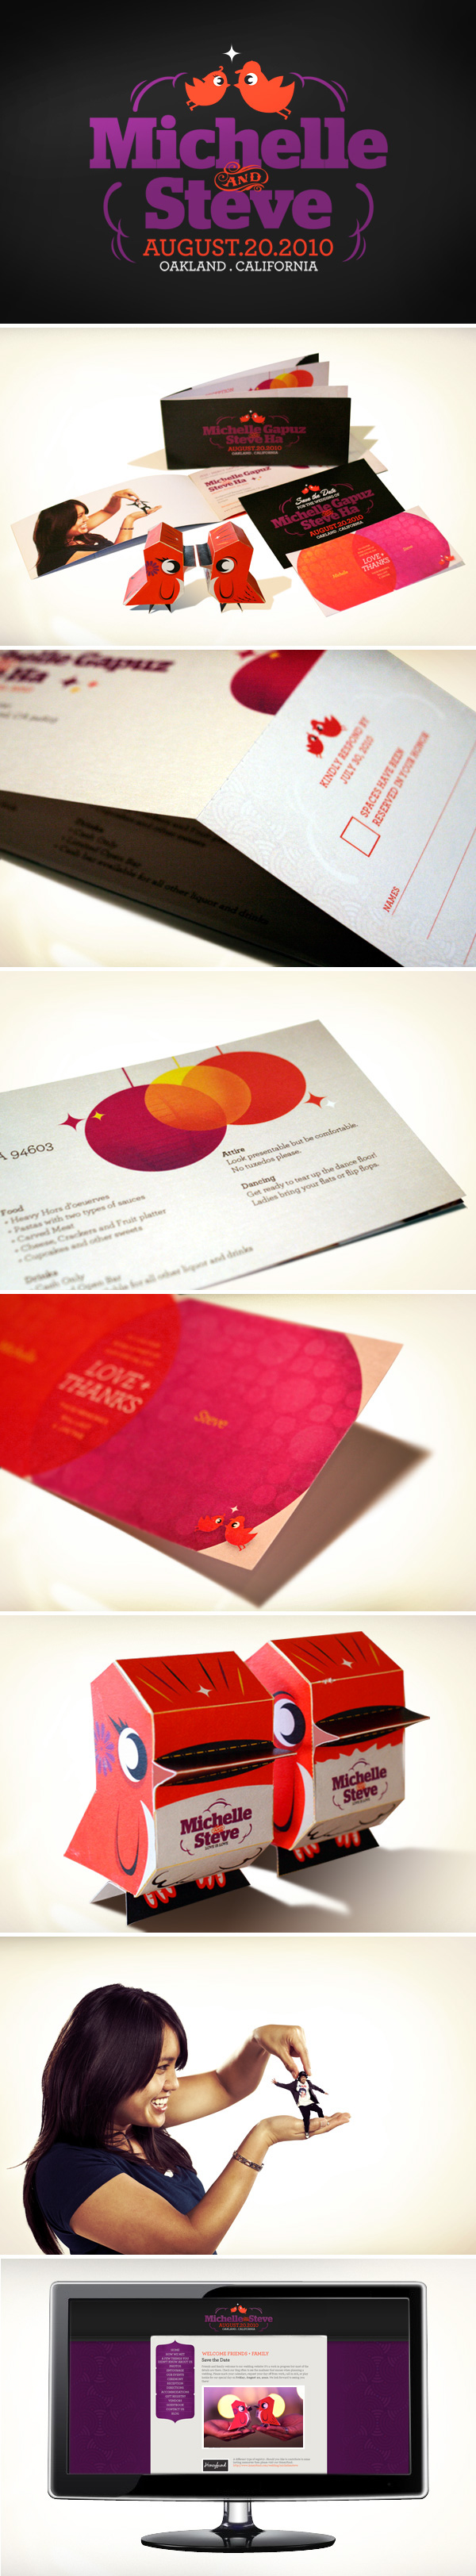 wedding wedding invitations save the date identity paper craft birds Love wedding website purple orange DIY